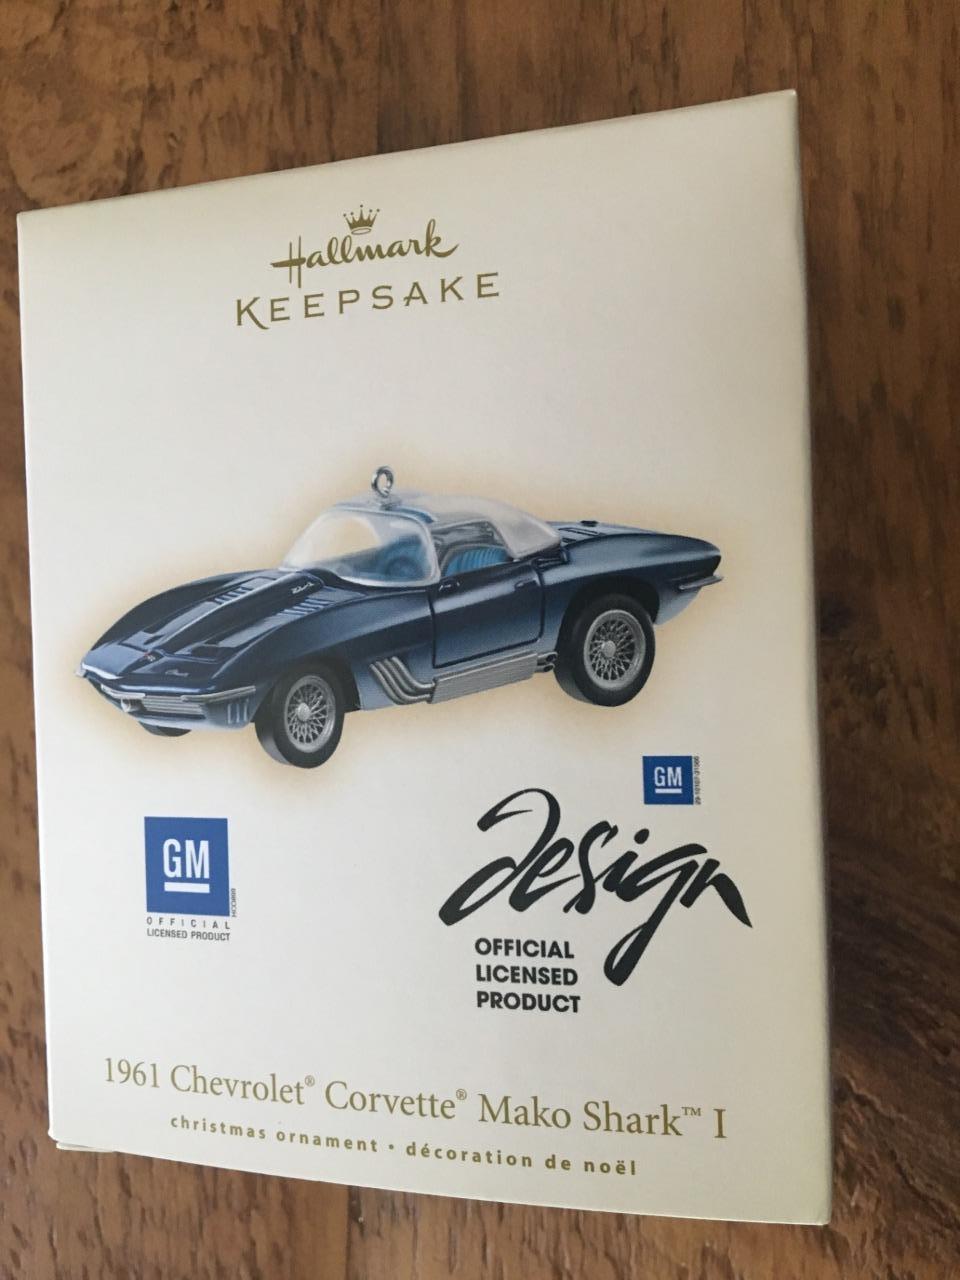 Hallmark Keepsake Ornament 1961 Chevrolet Corvette Mako Shark I 2007 Car GM - Picture 1 of 1